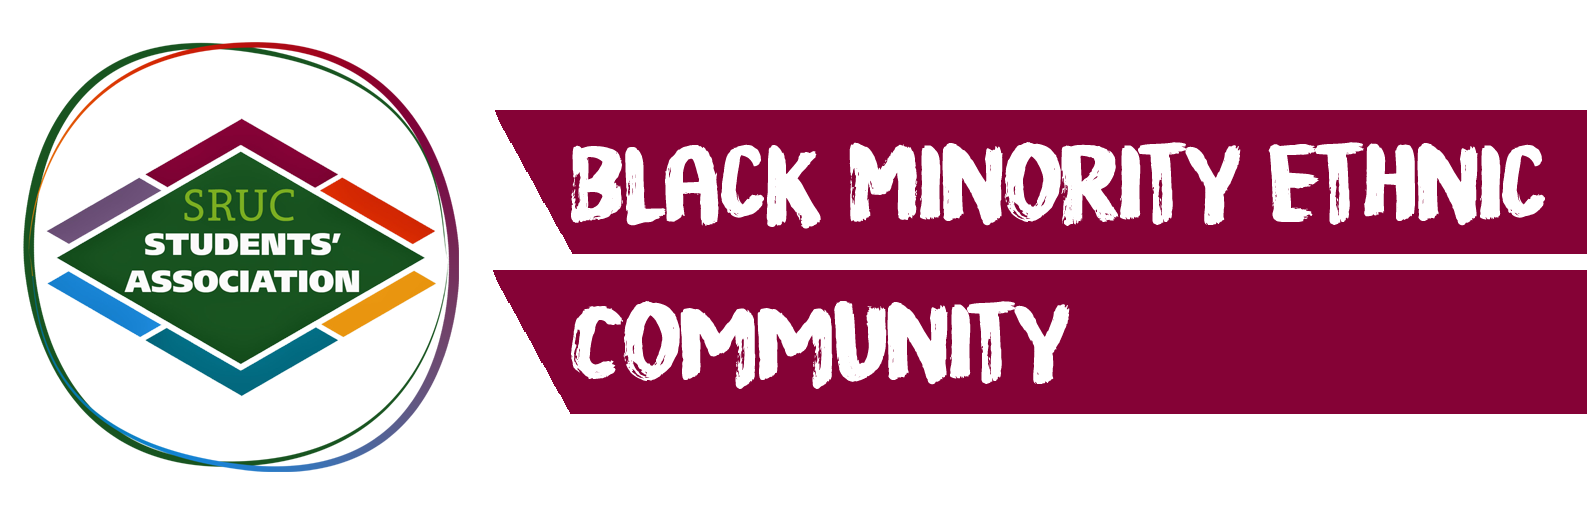 Black minority and ethnic students community banner